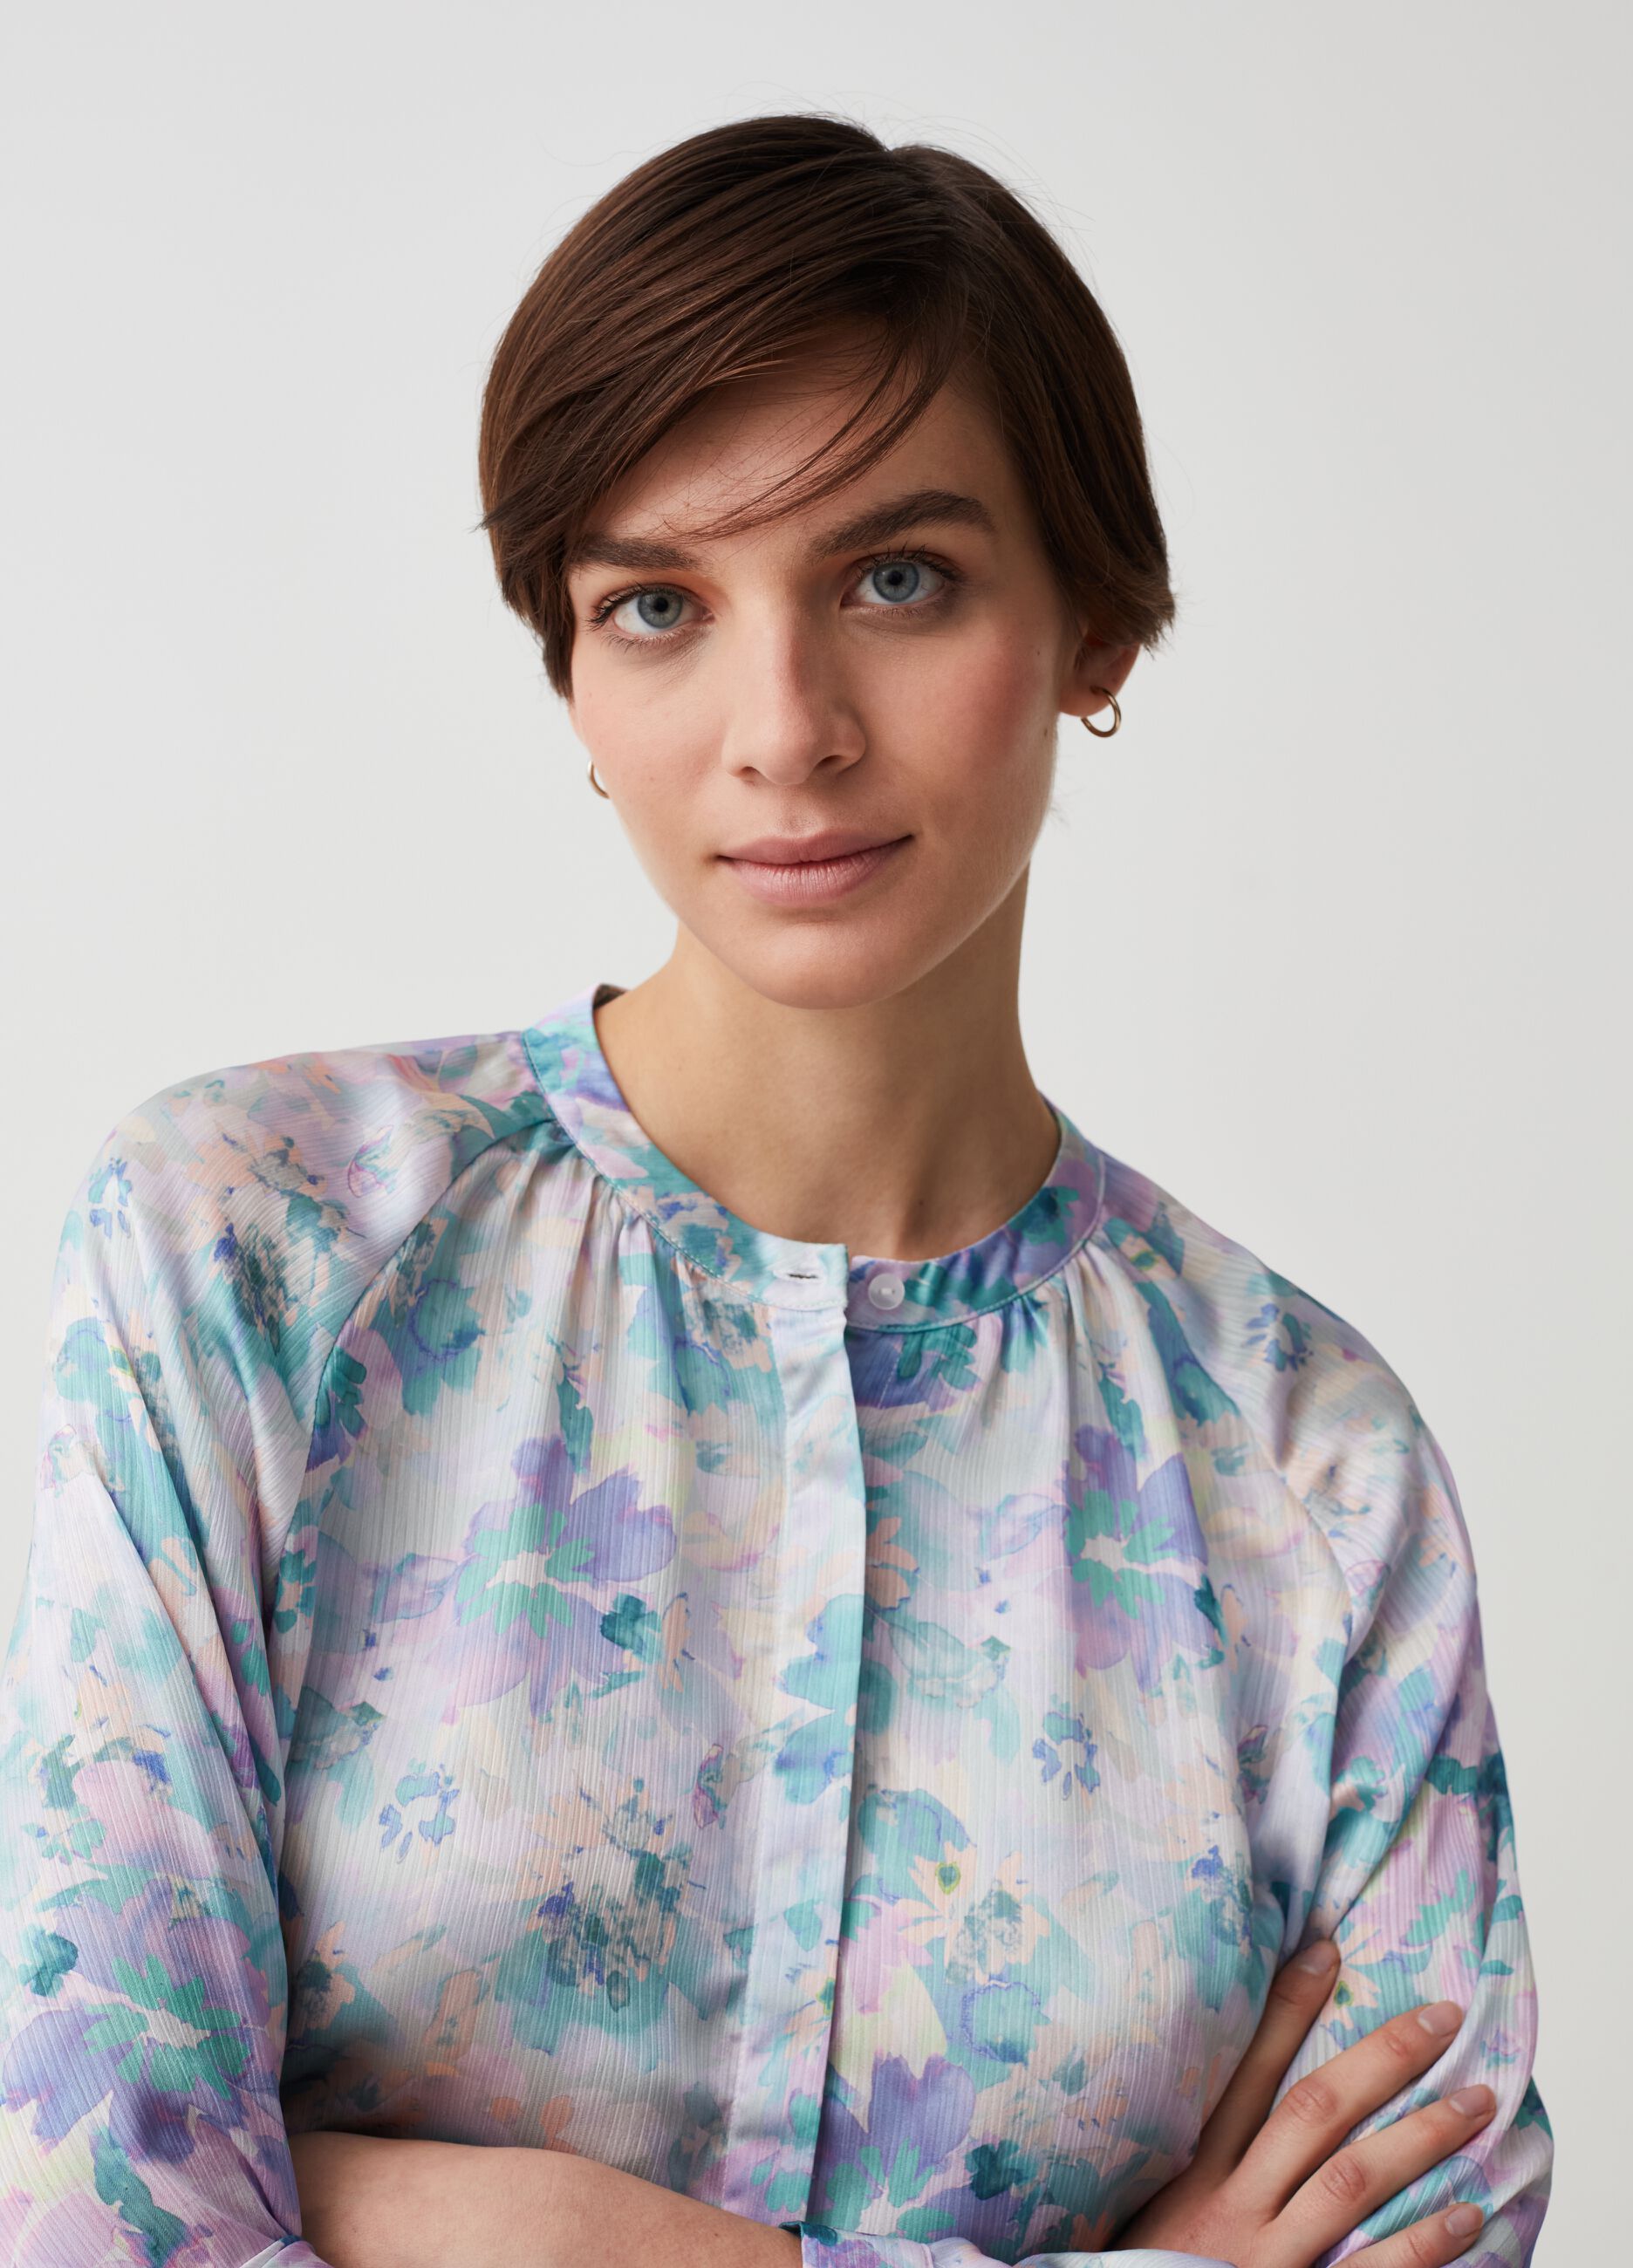 Crêpe blouse with jacquard floral design